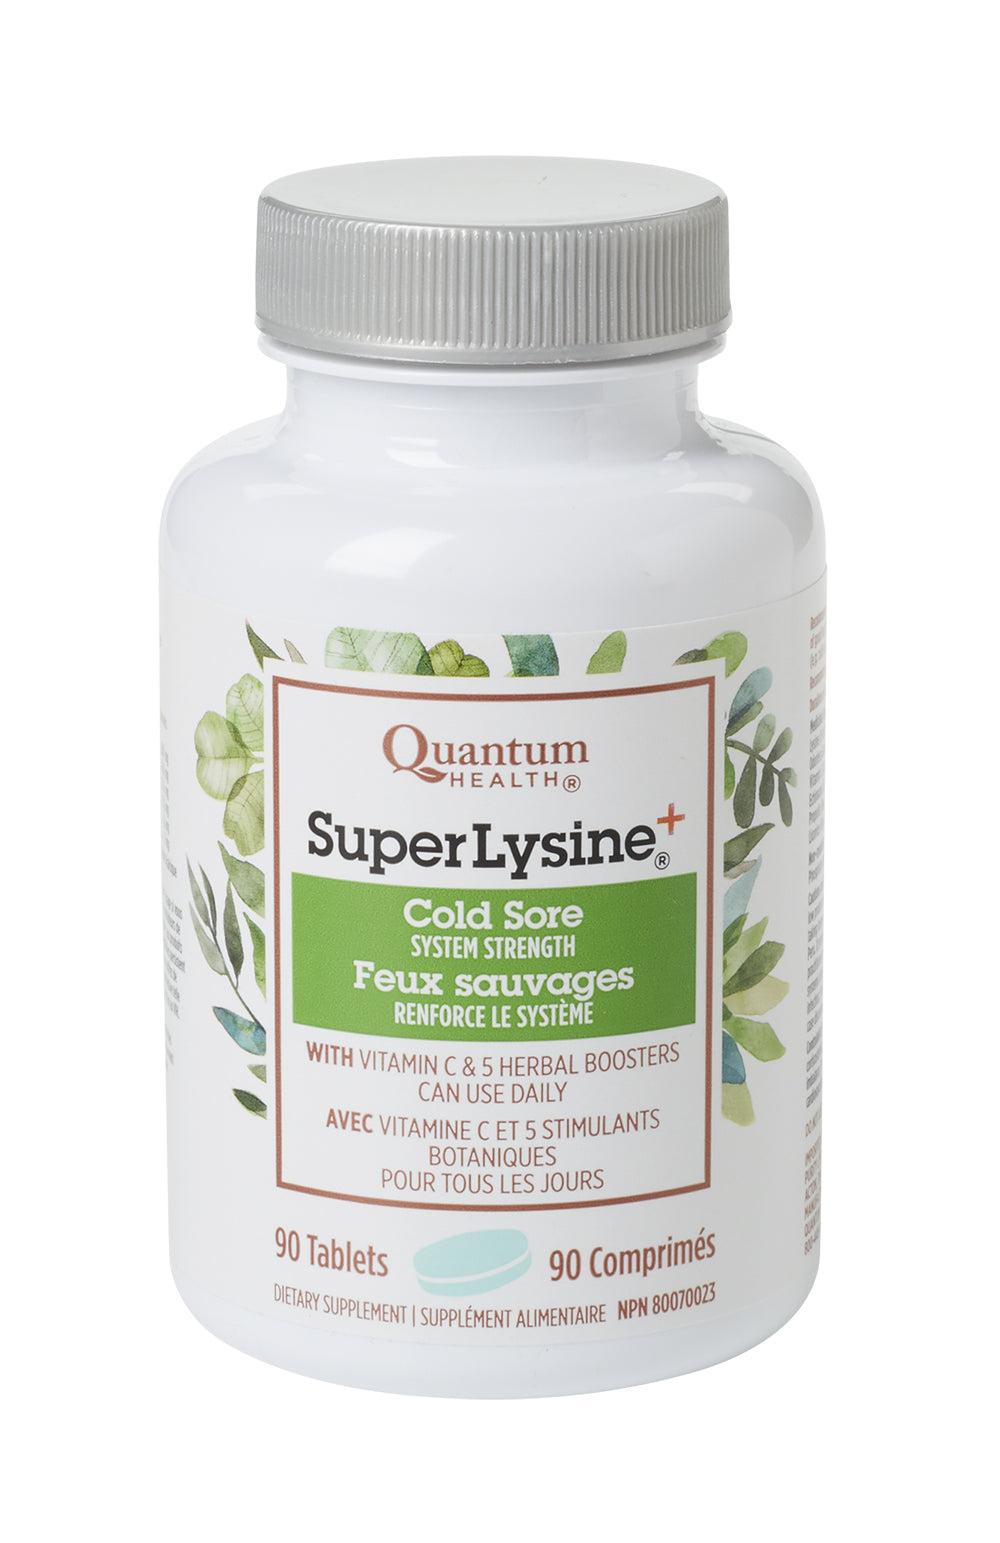 Super lysine+ (cold sore treatment) 90comp